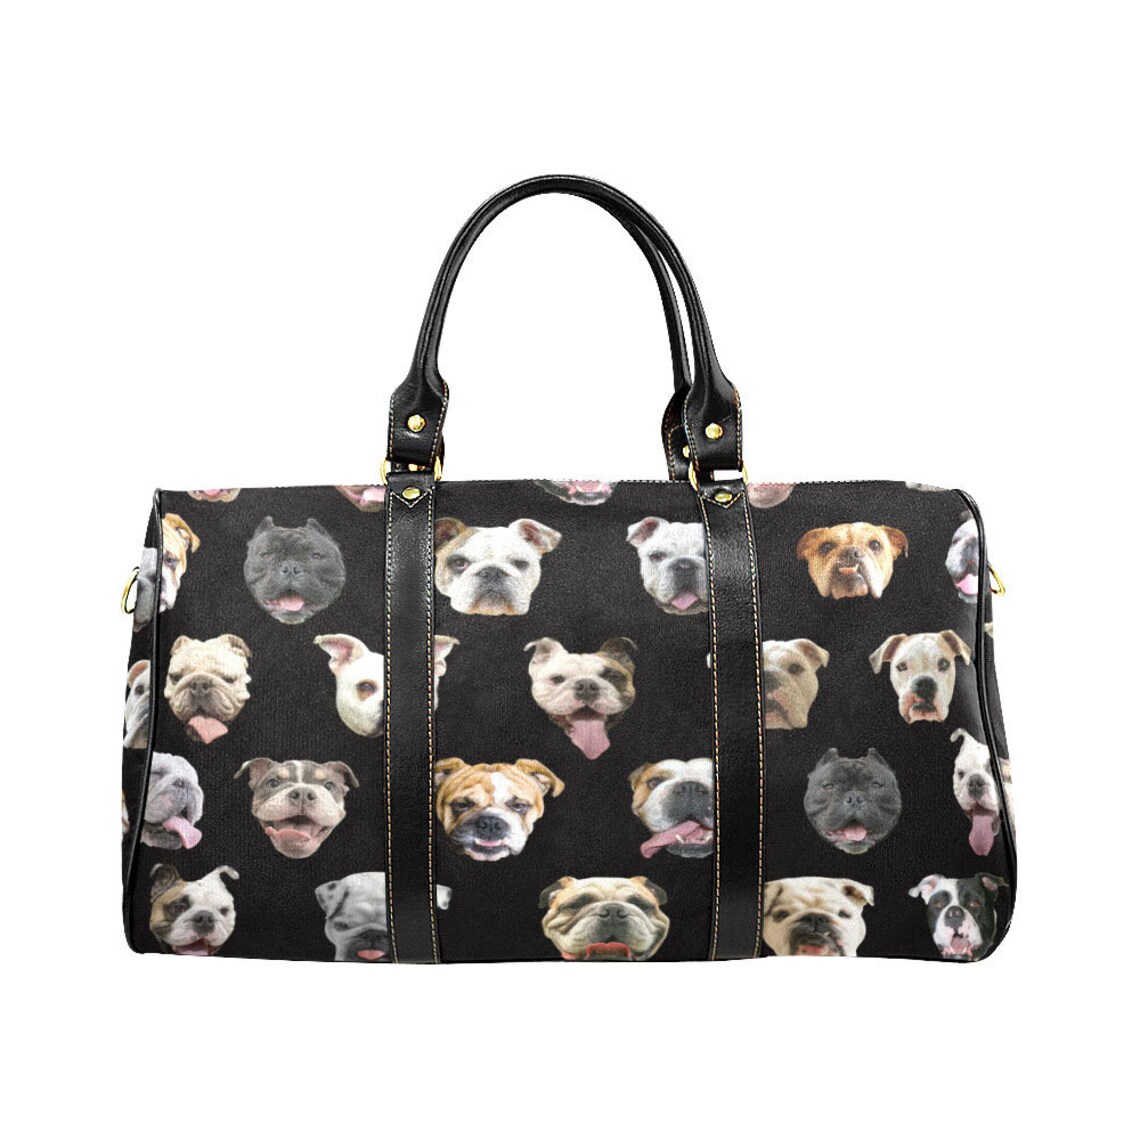 English Bulldogs Travel Bag large zippered luggage with | Etsy